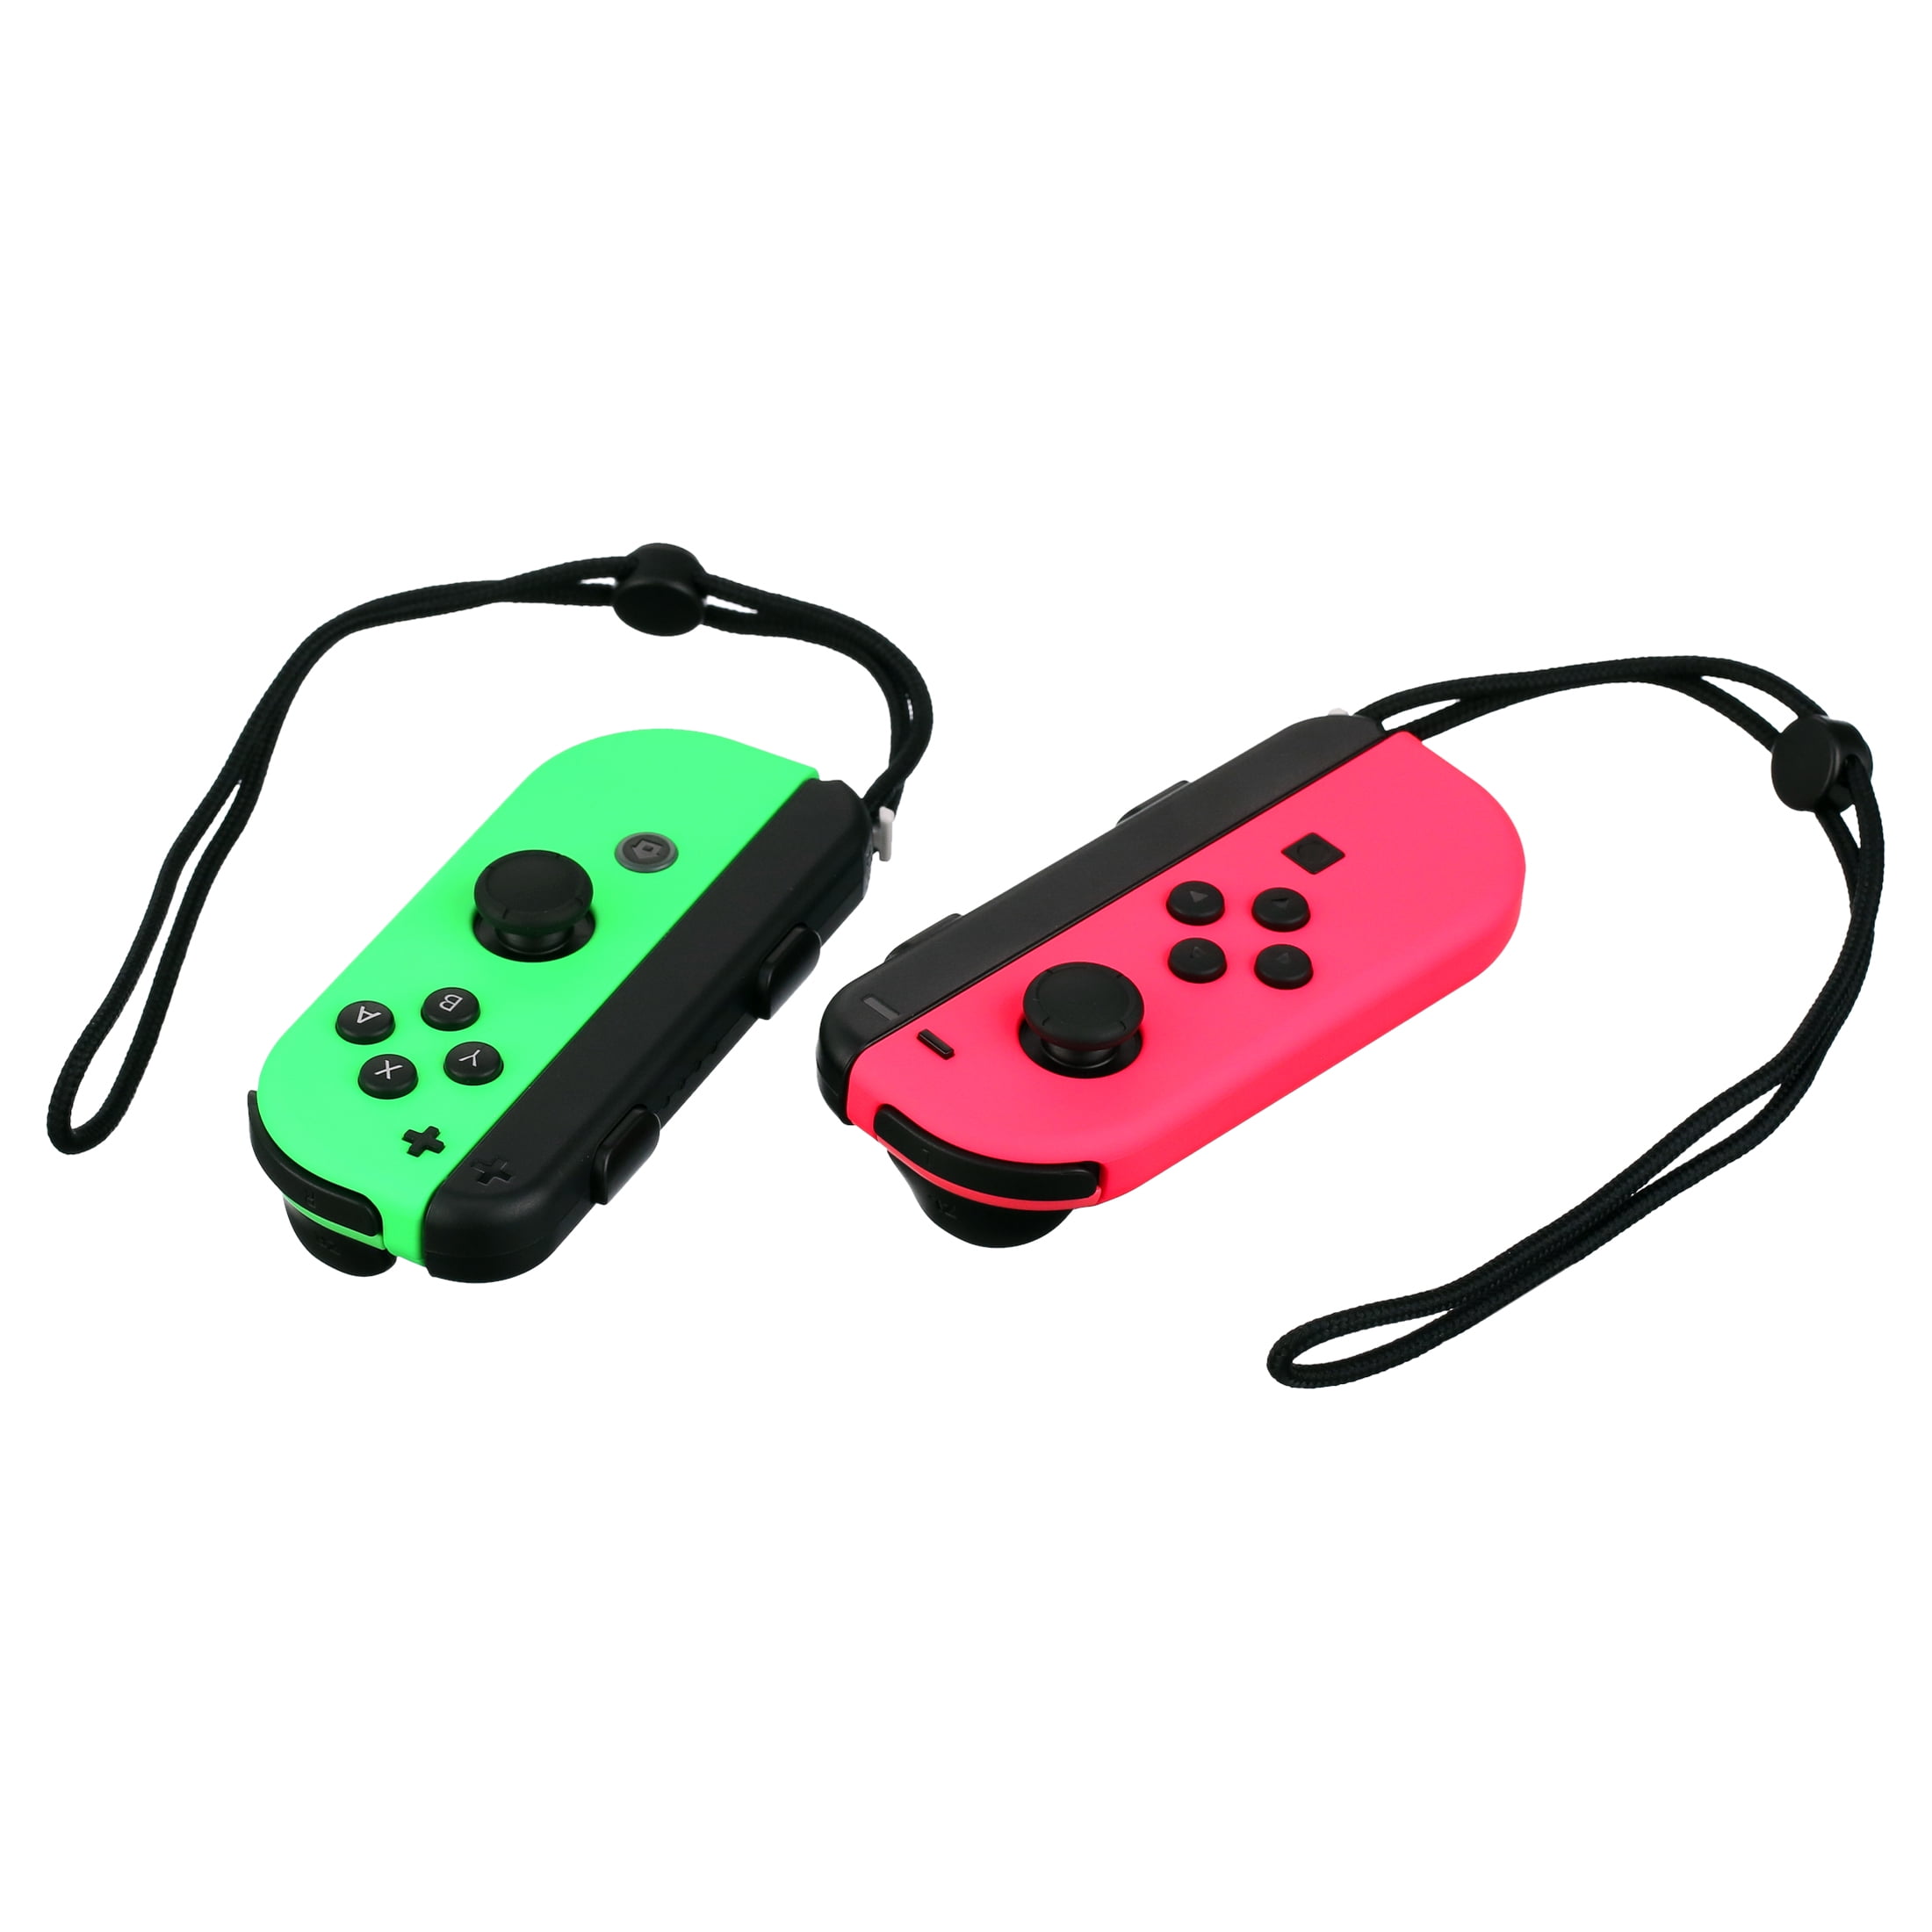 Genuine Nintendo Switch Joy Con Wireless Controller Neon Green (Right)